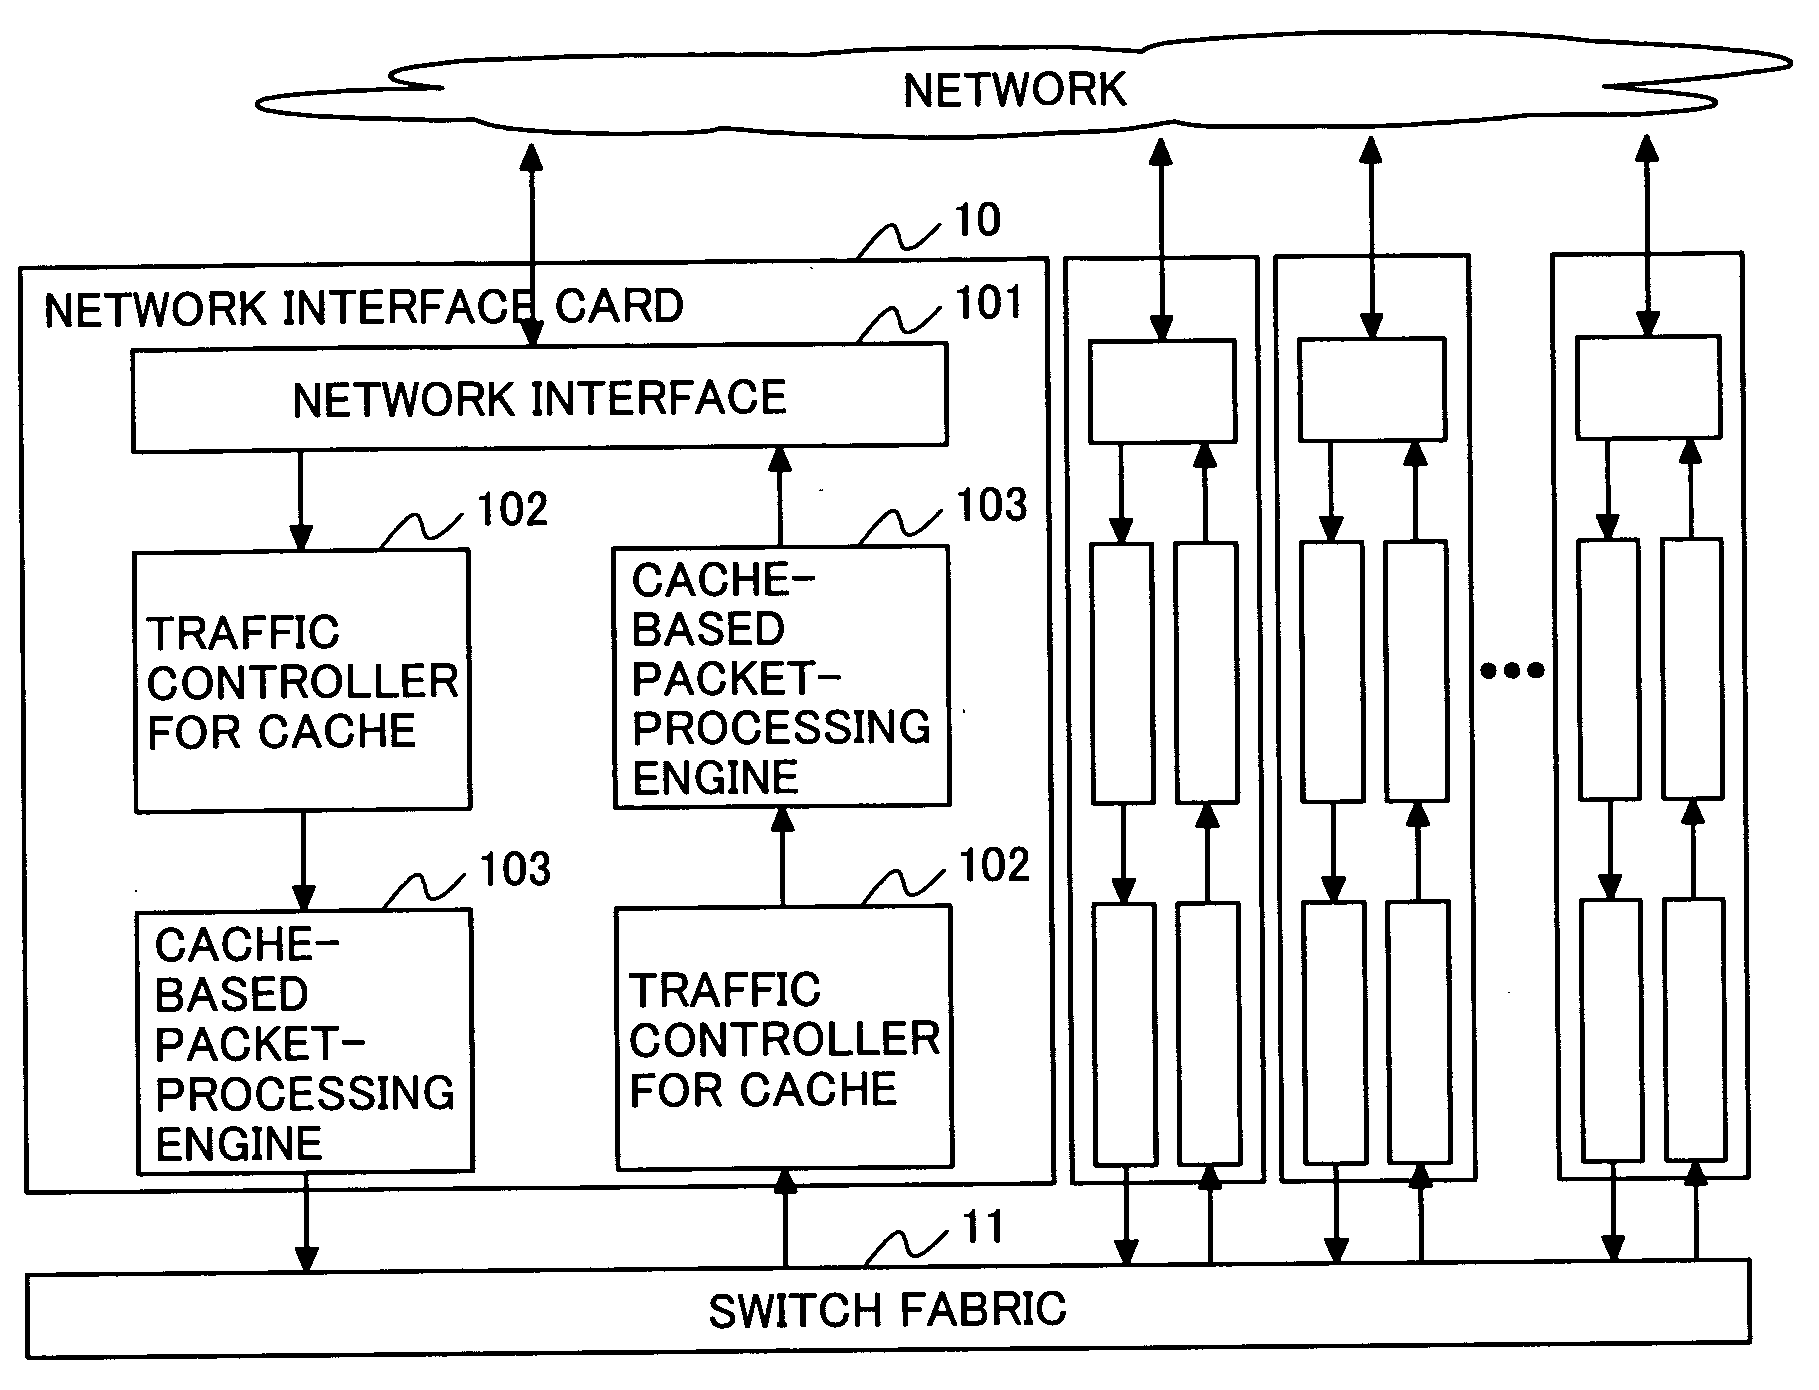 Traffic control method for network equipment